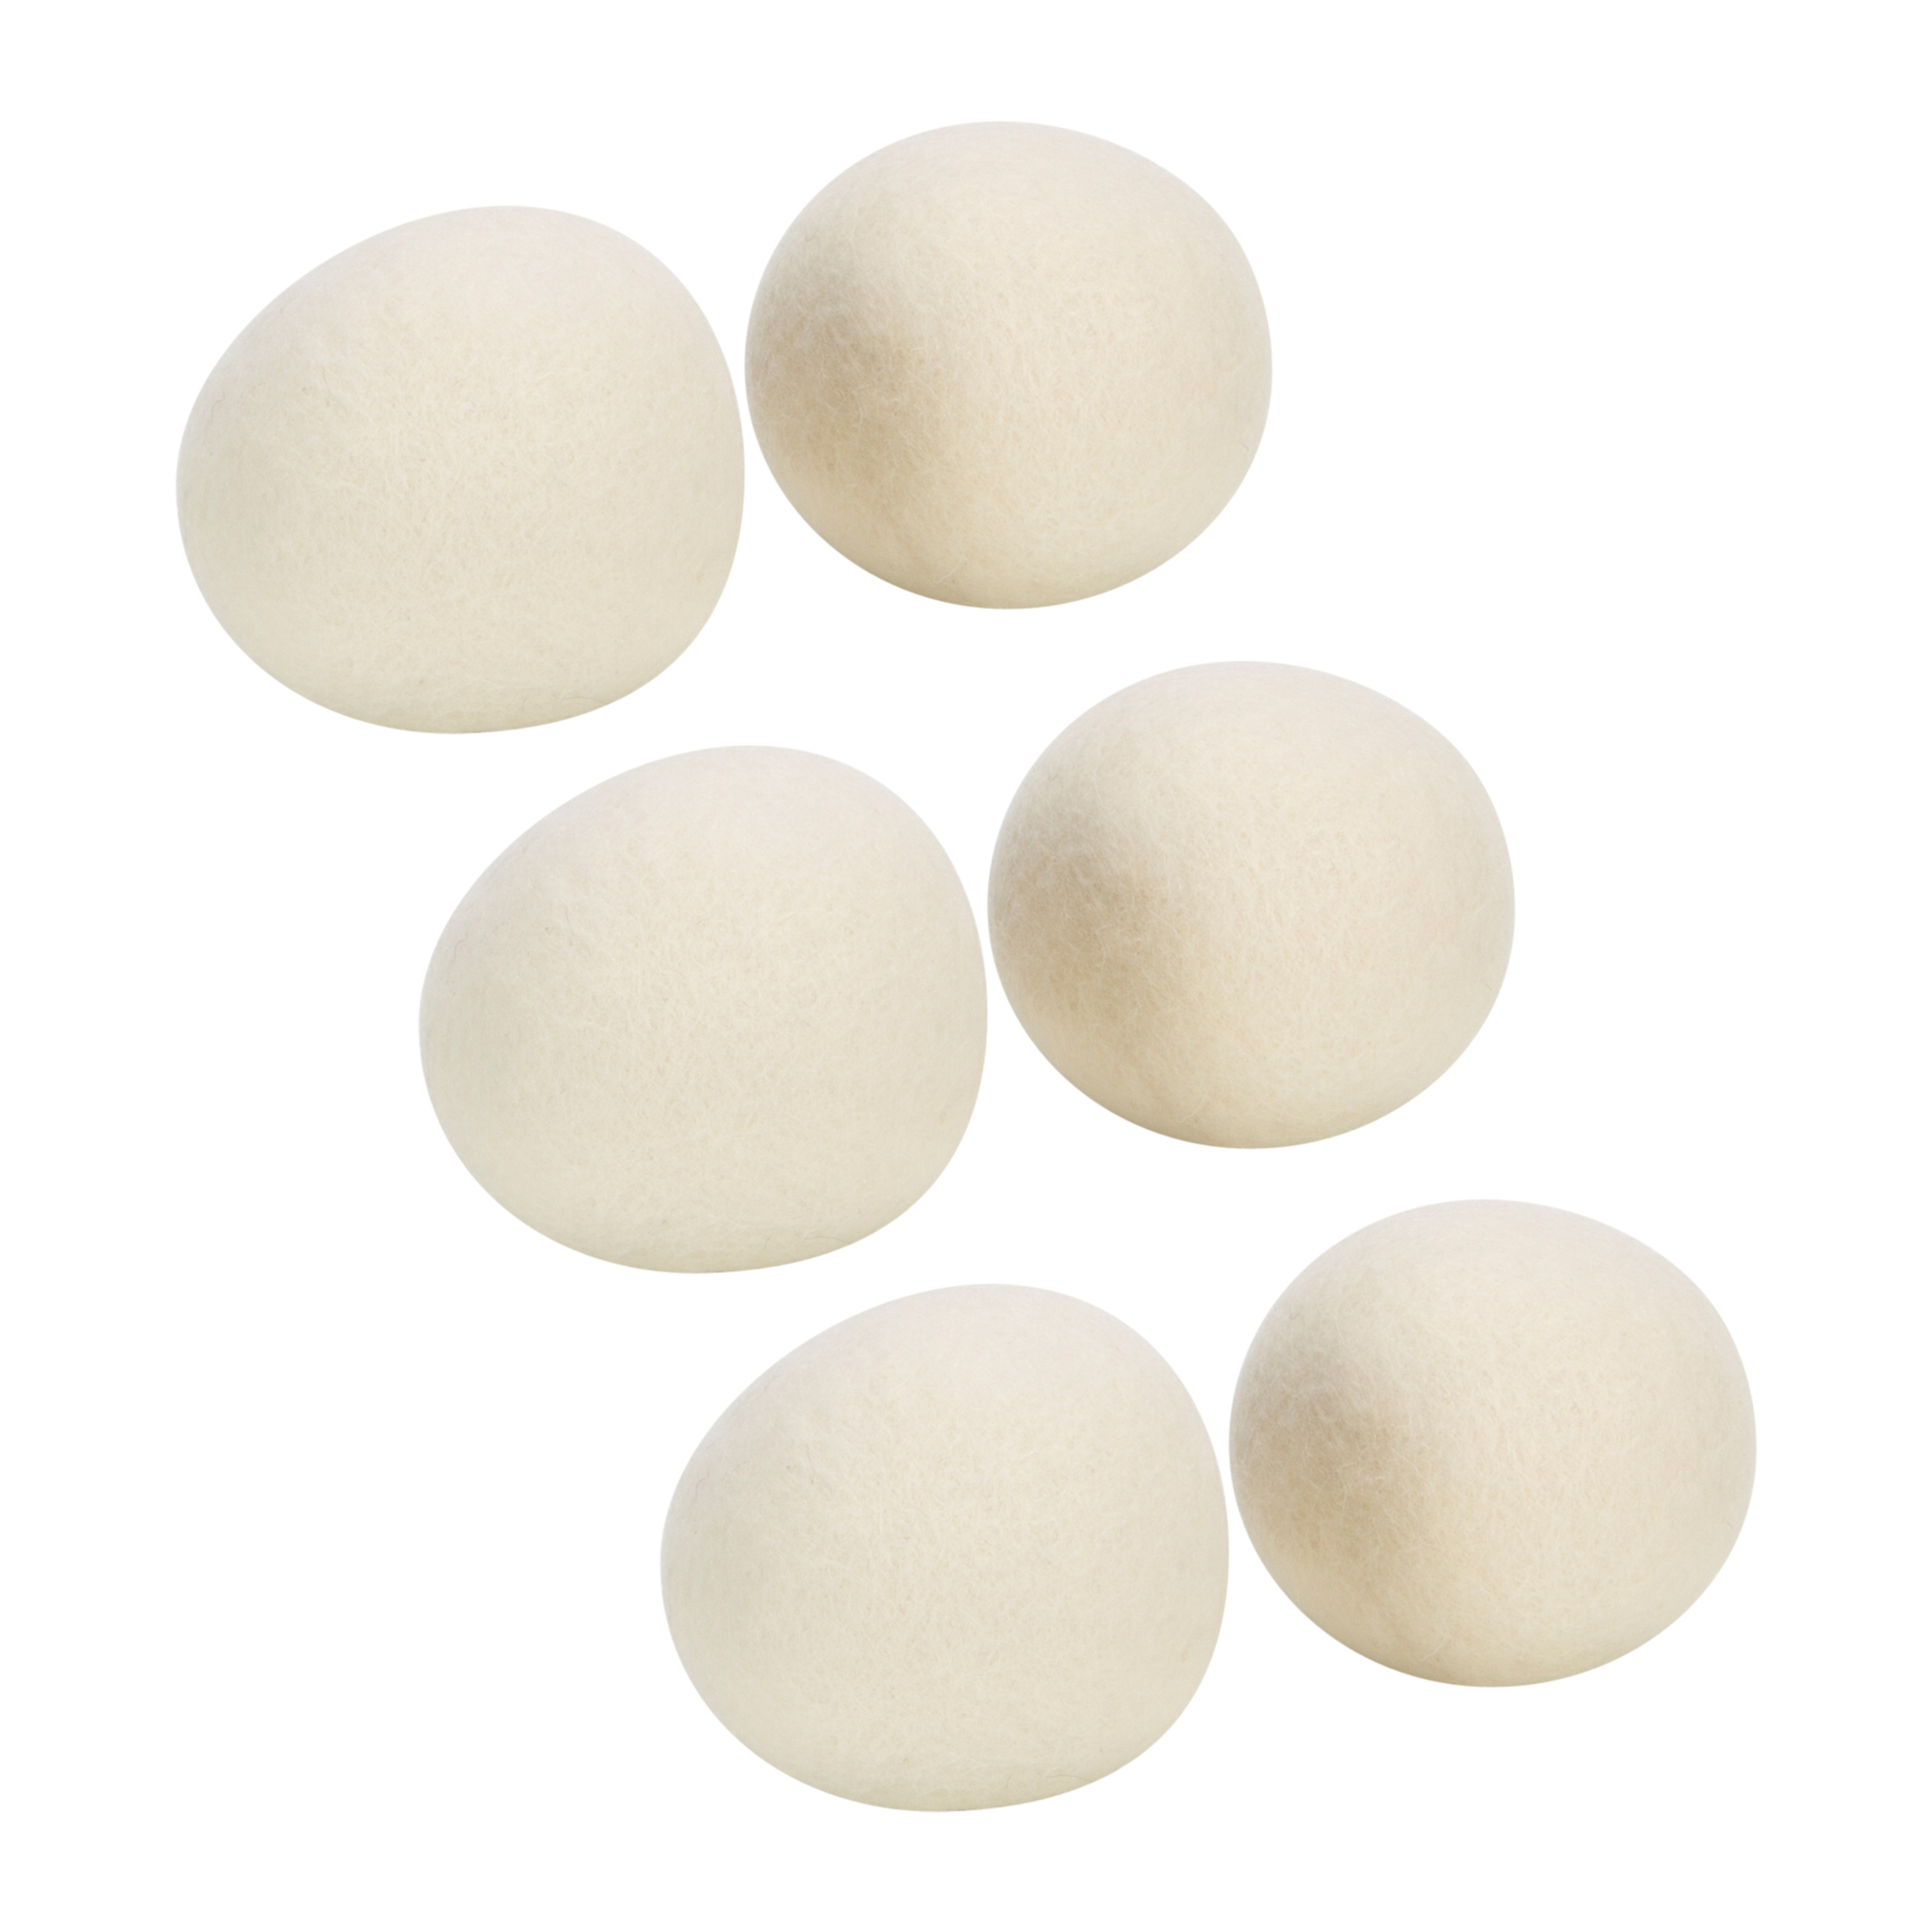 Better Homes & Gardens Wool Dryer Balls, 6 Balls per Pack - image 5 of 6